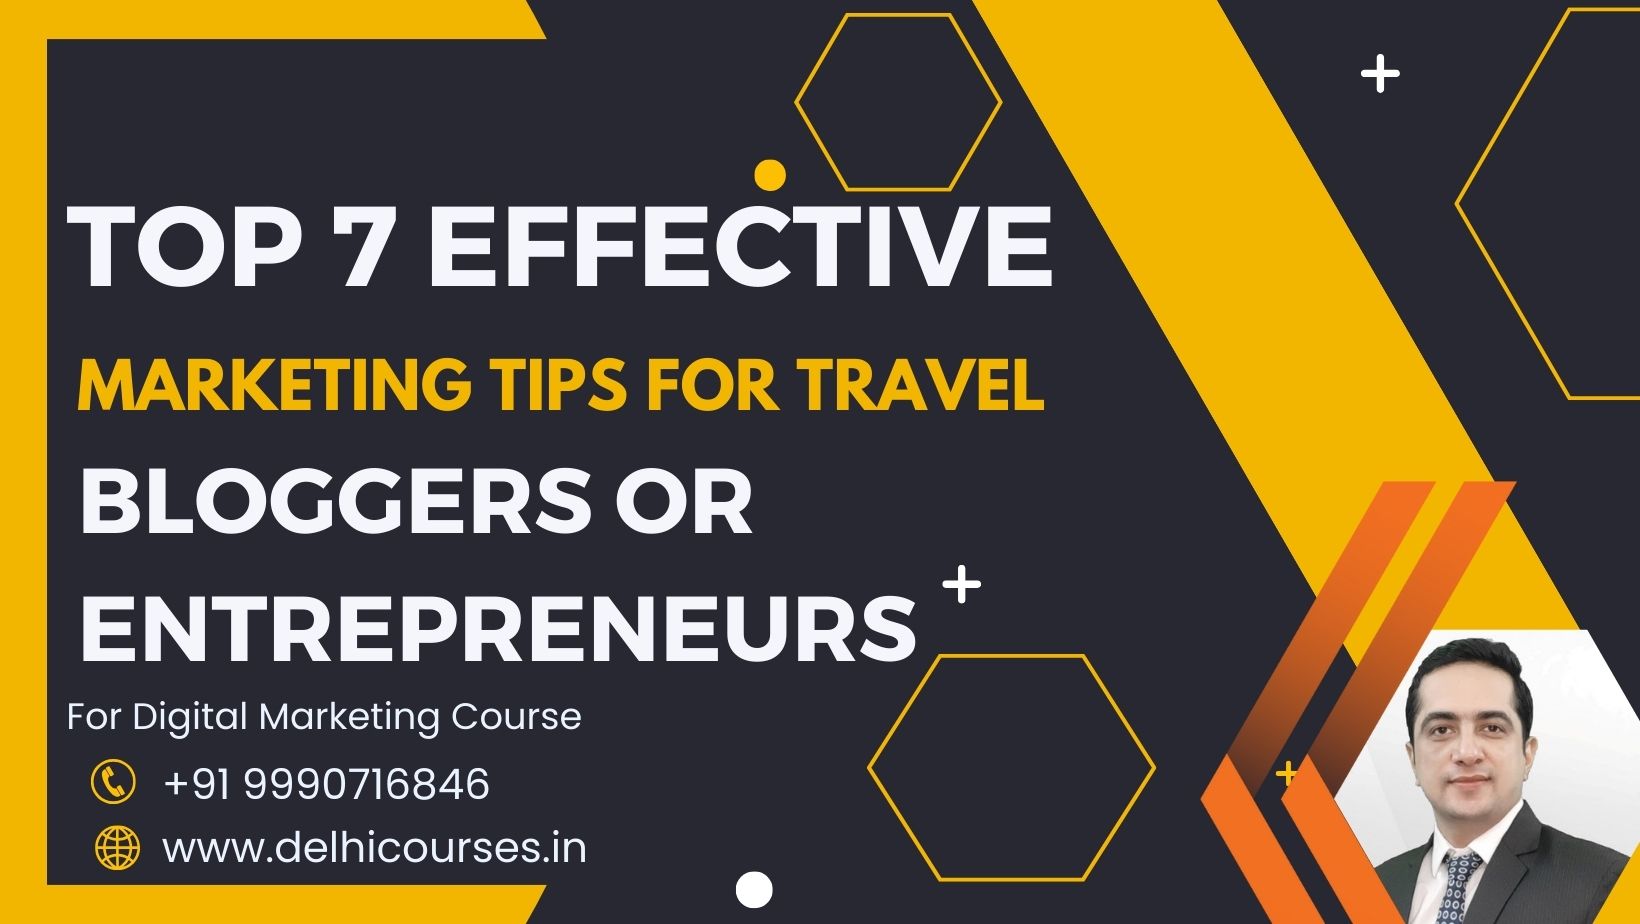 Top 7 Effective Marketing Tips for Travel Bloggers or Entrepreneurs